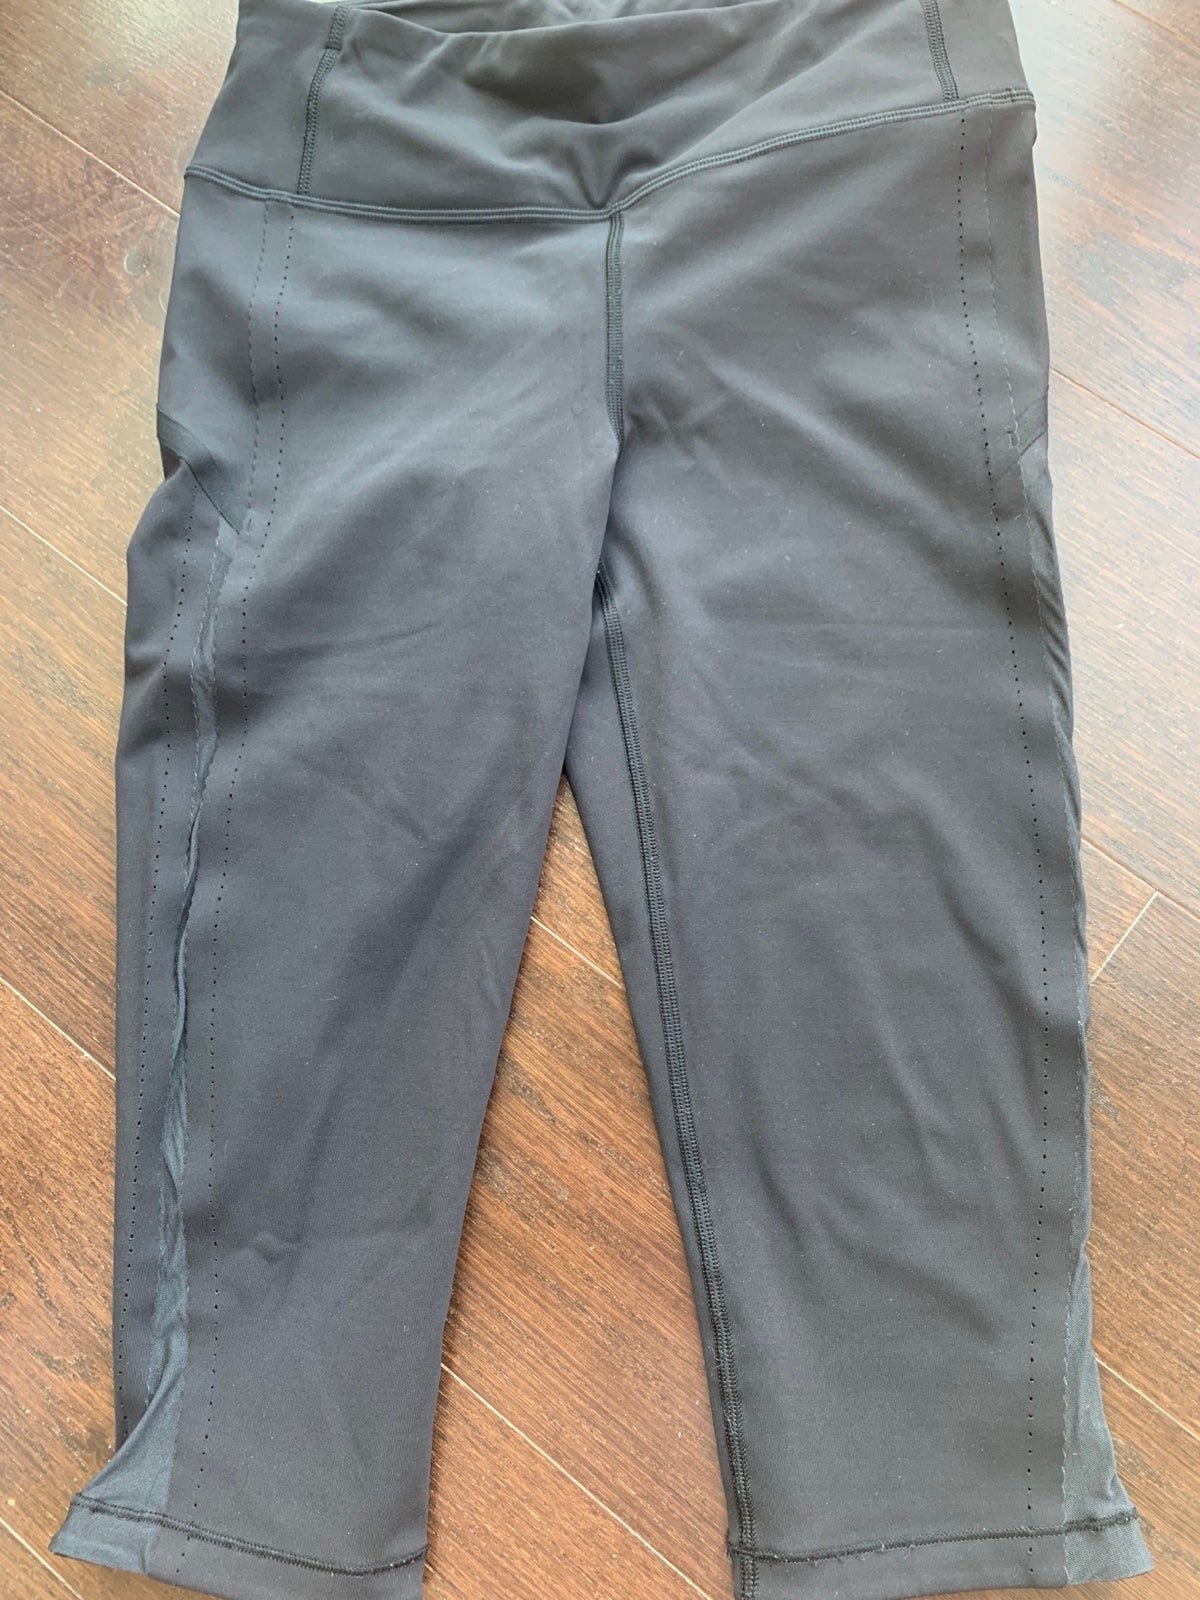 Discounted lululemon leggings size 6 gjTG4gGJX Wholesale